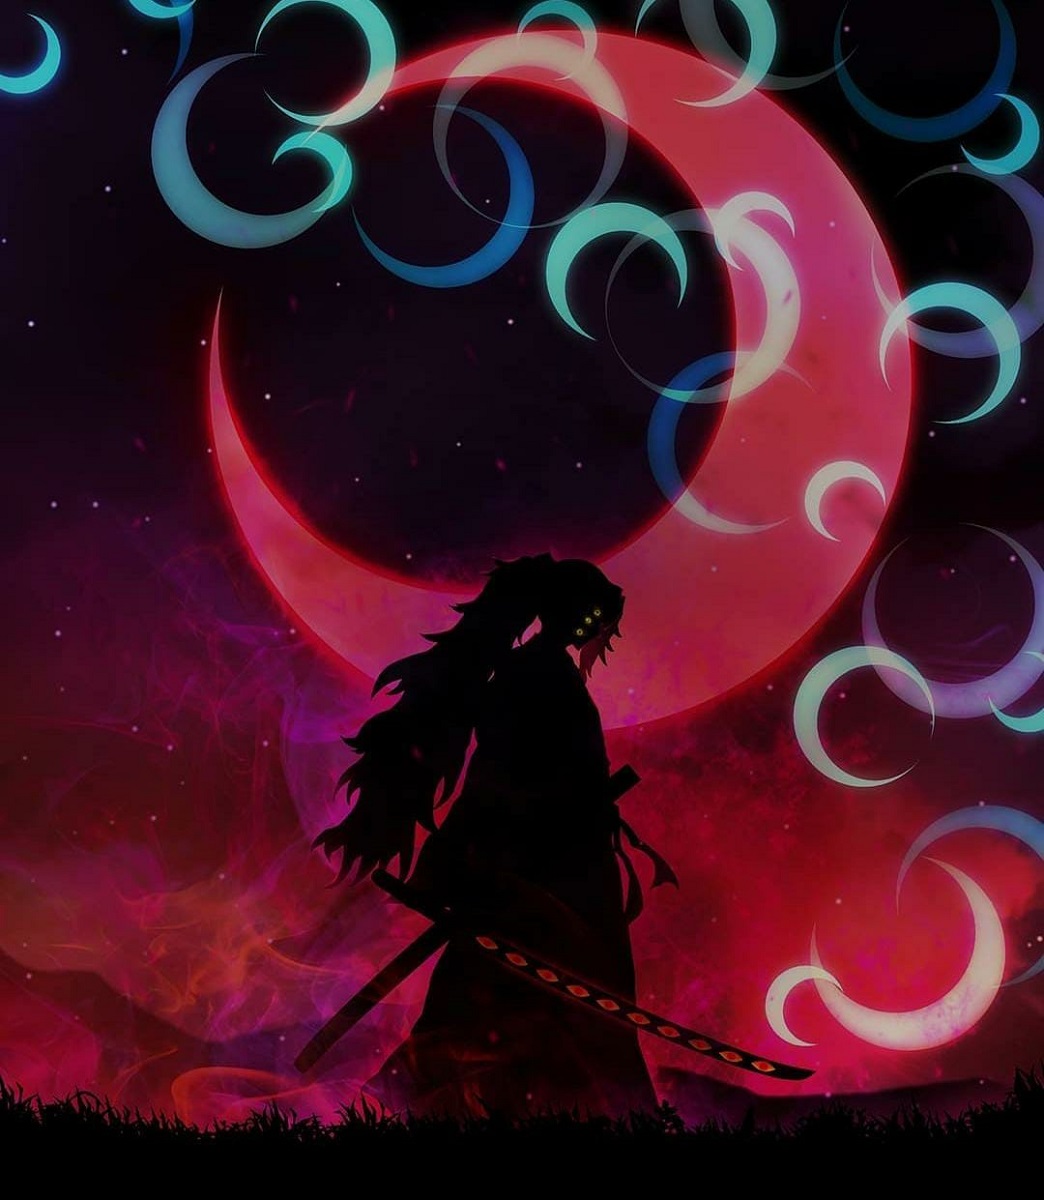 Daftar Seluruh Teknik Pernapasan Bulan di Anime Kimetsu no Yaiba, Nomor 11 Ternyata Paling Kuat